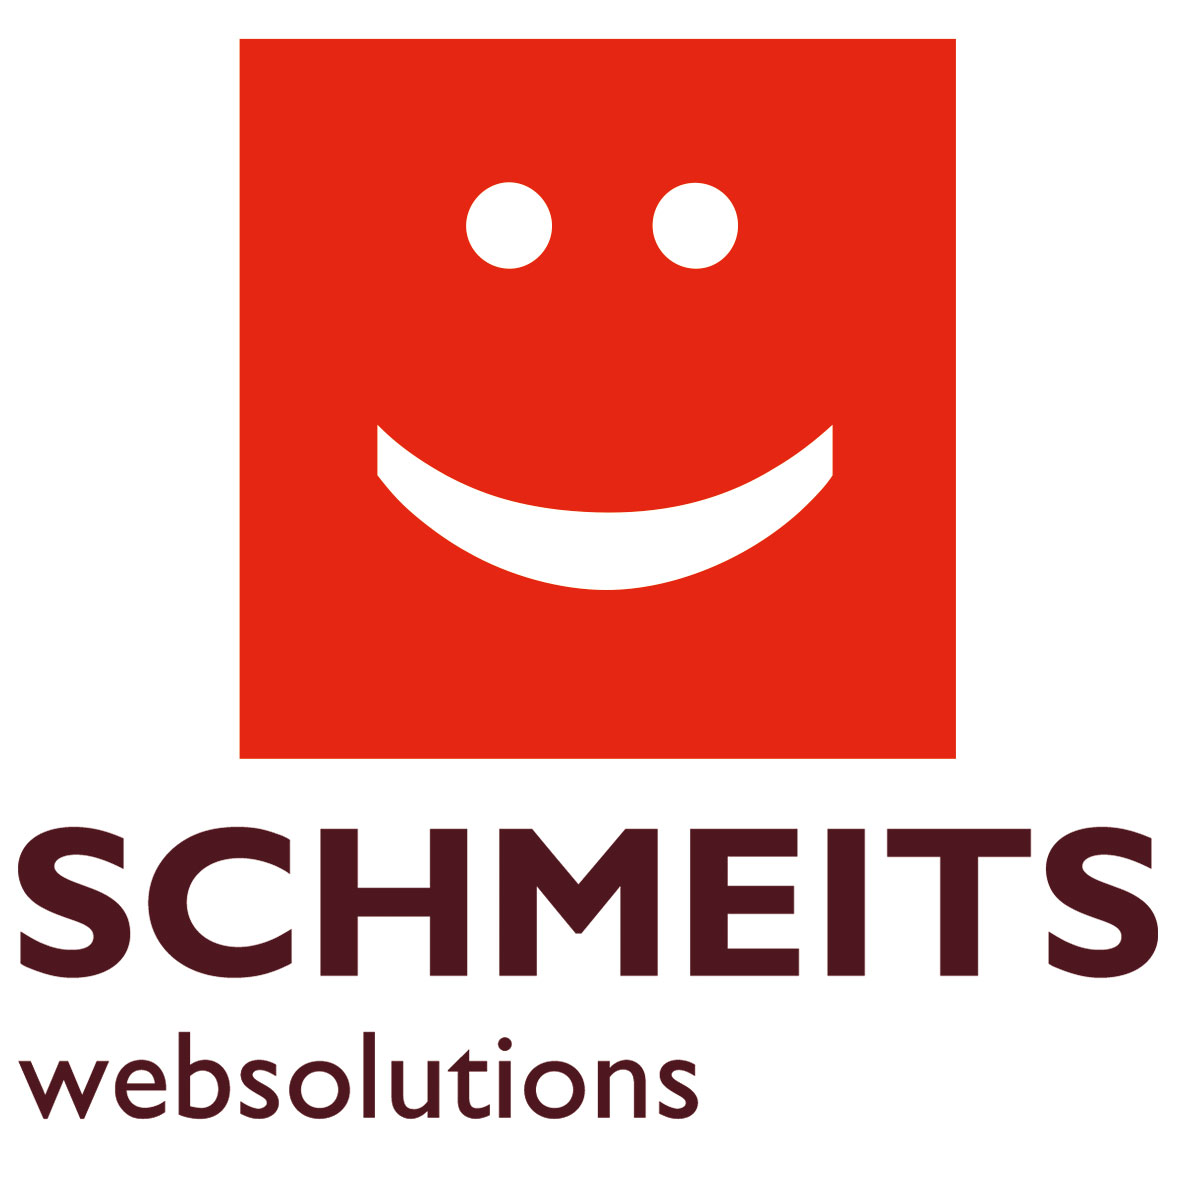 Schmeits websolutions

